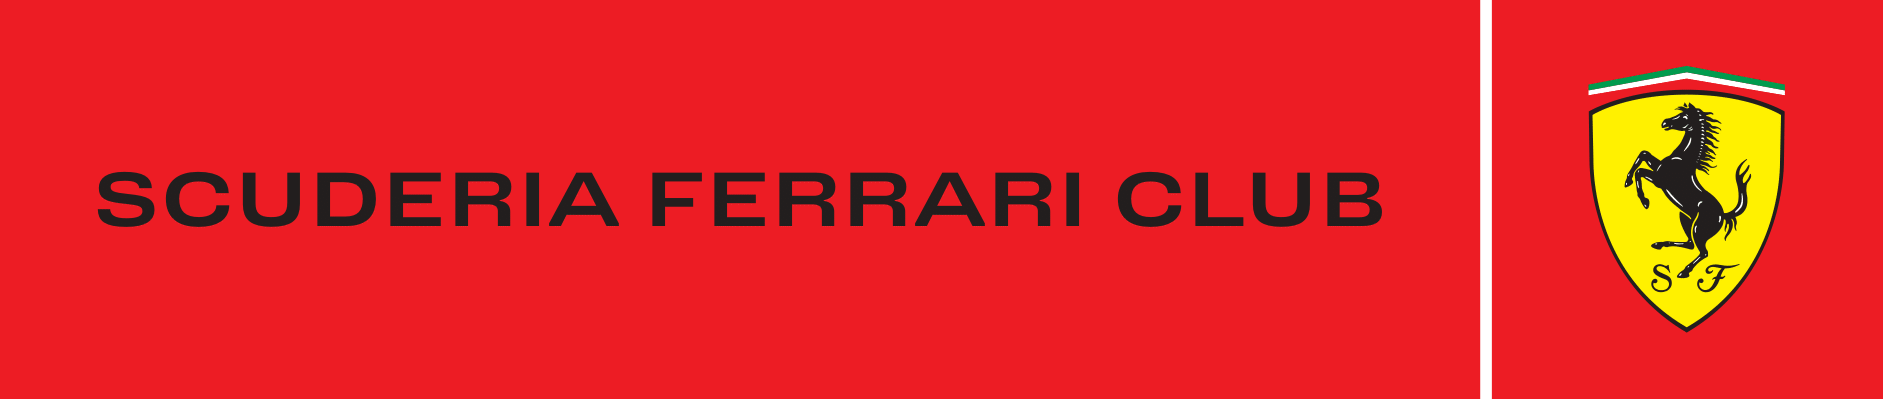 Scuderia Ferrari Club Logo Footer